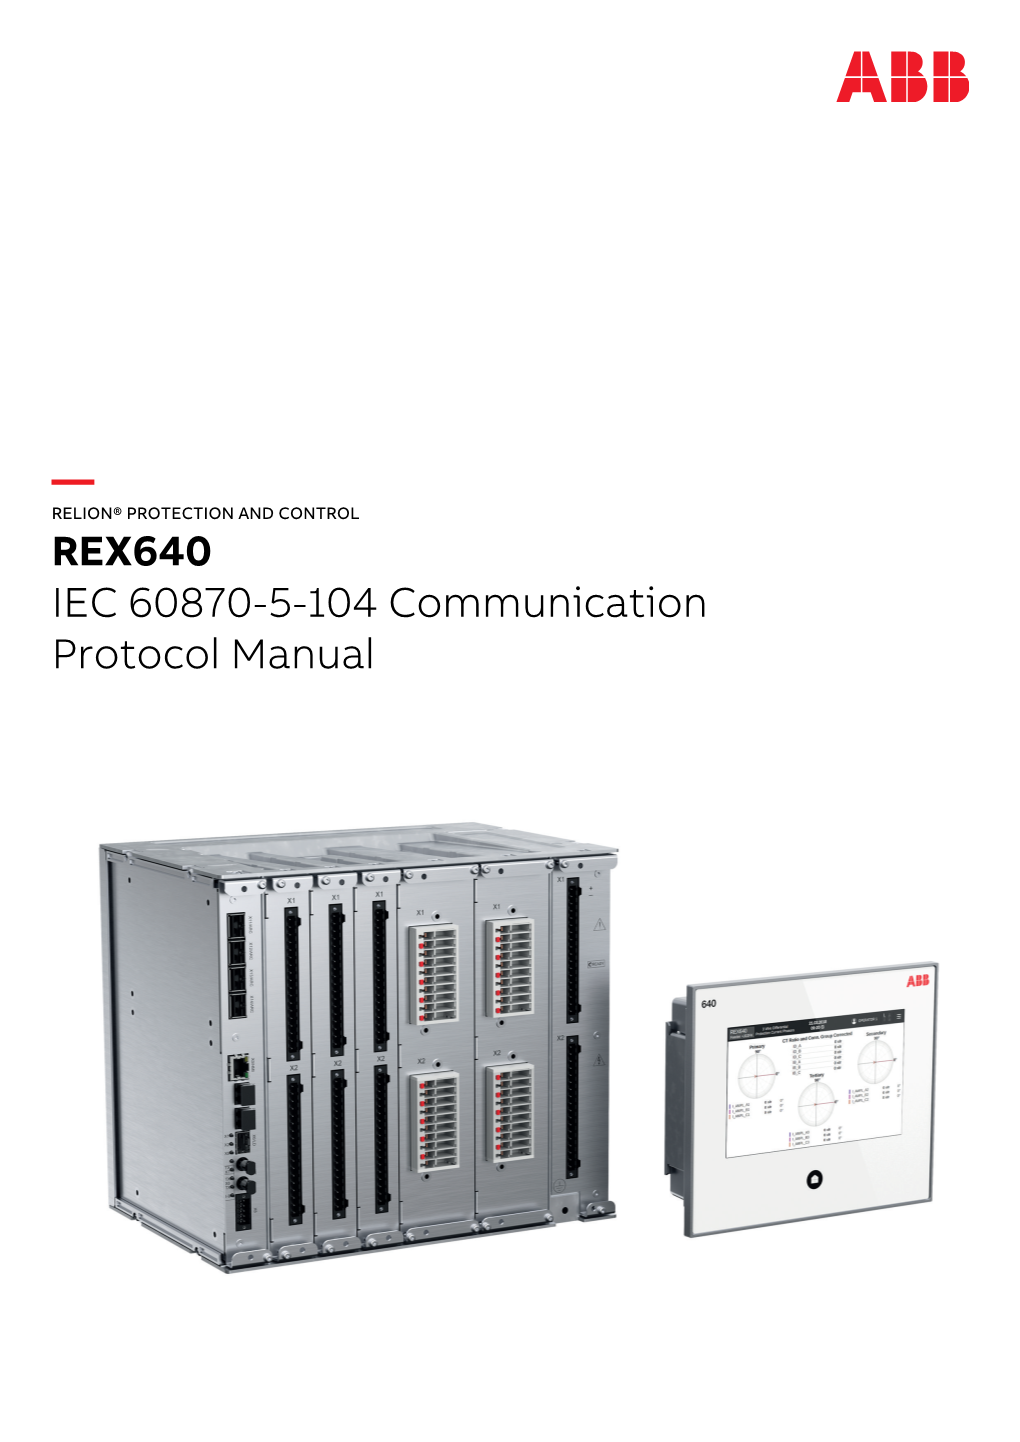 — REX640 IEC 60870-5-104 Communication Protocol Manual